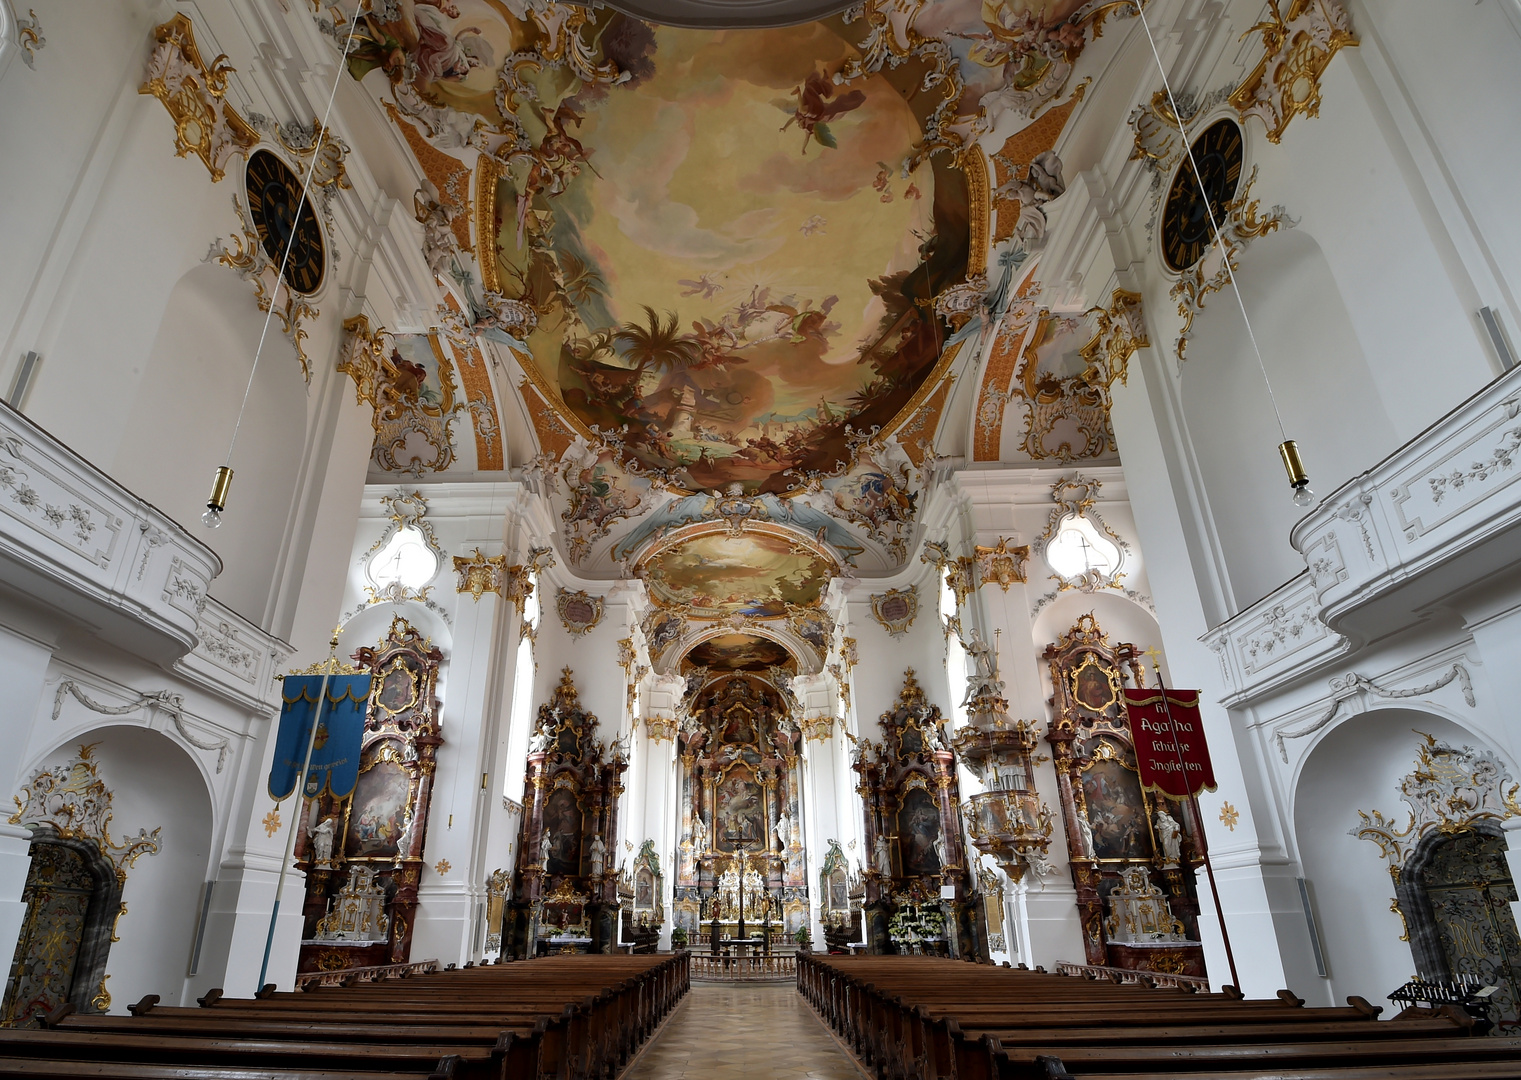 Pfarrkirche Mariä Himmelfahrt Kloster Roggenburg Blick zum Chor